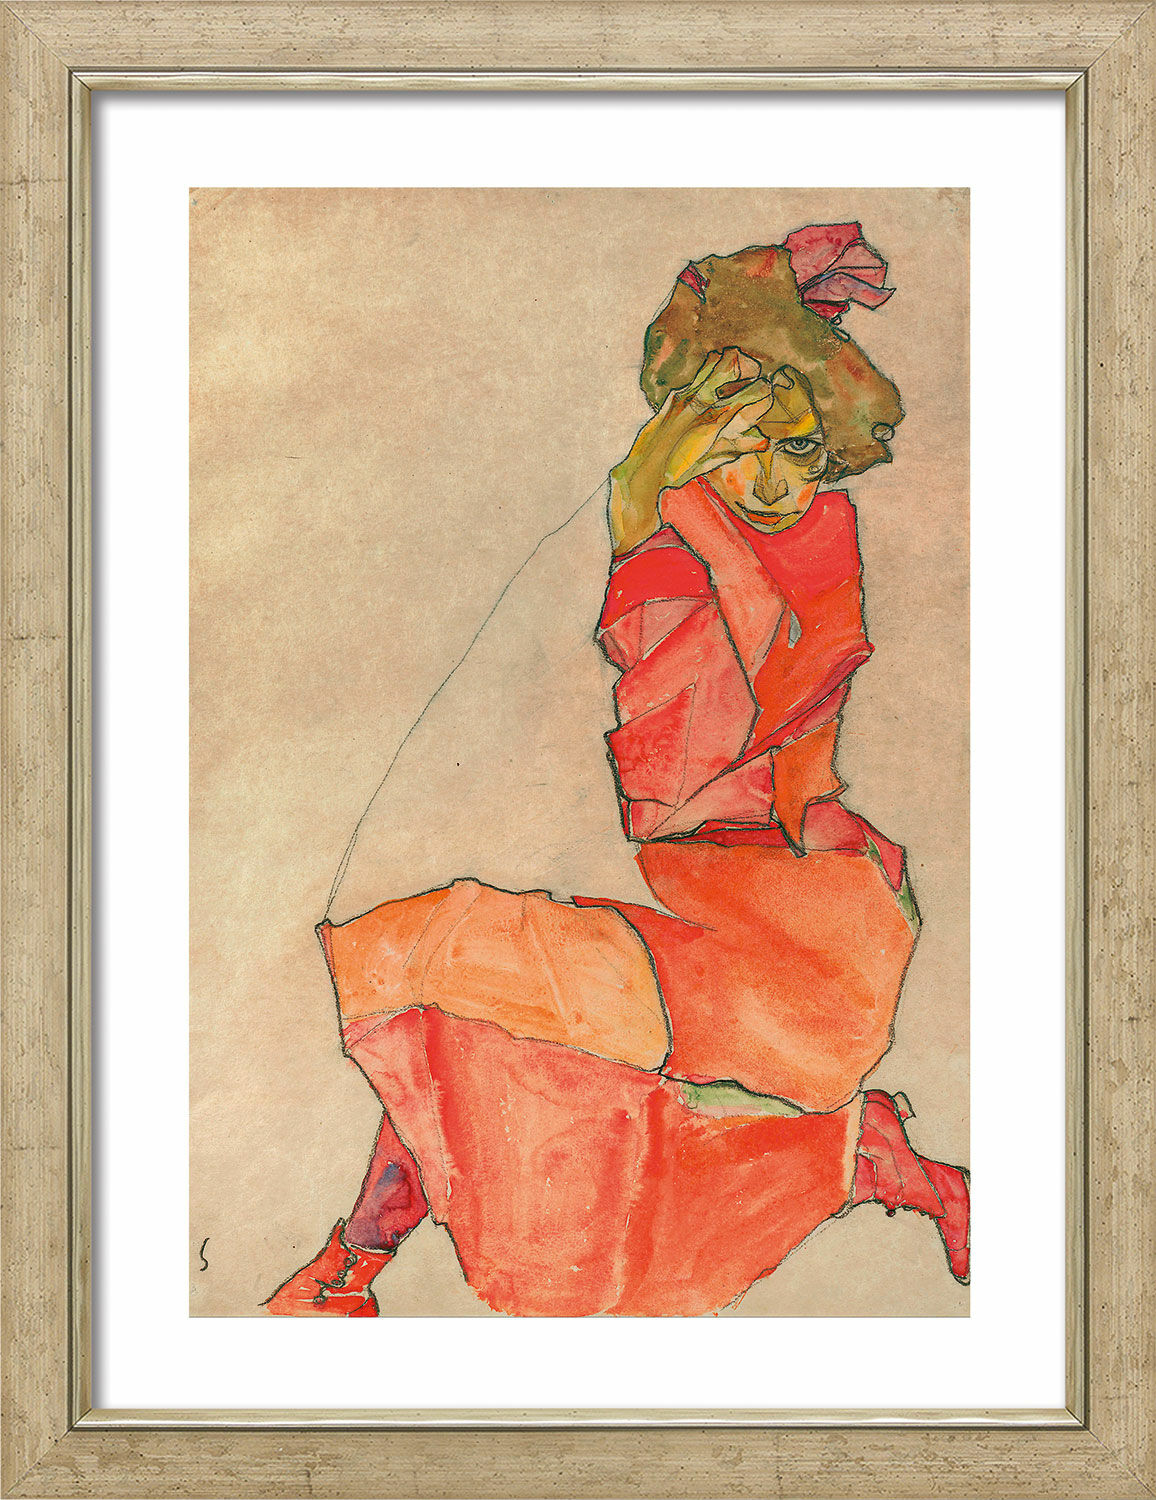 Billede "Knælende dame i orange-rød kjole" (1910), indrammet von Egon Schiele